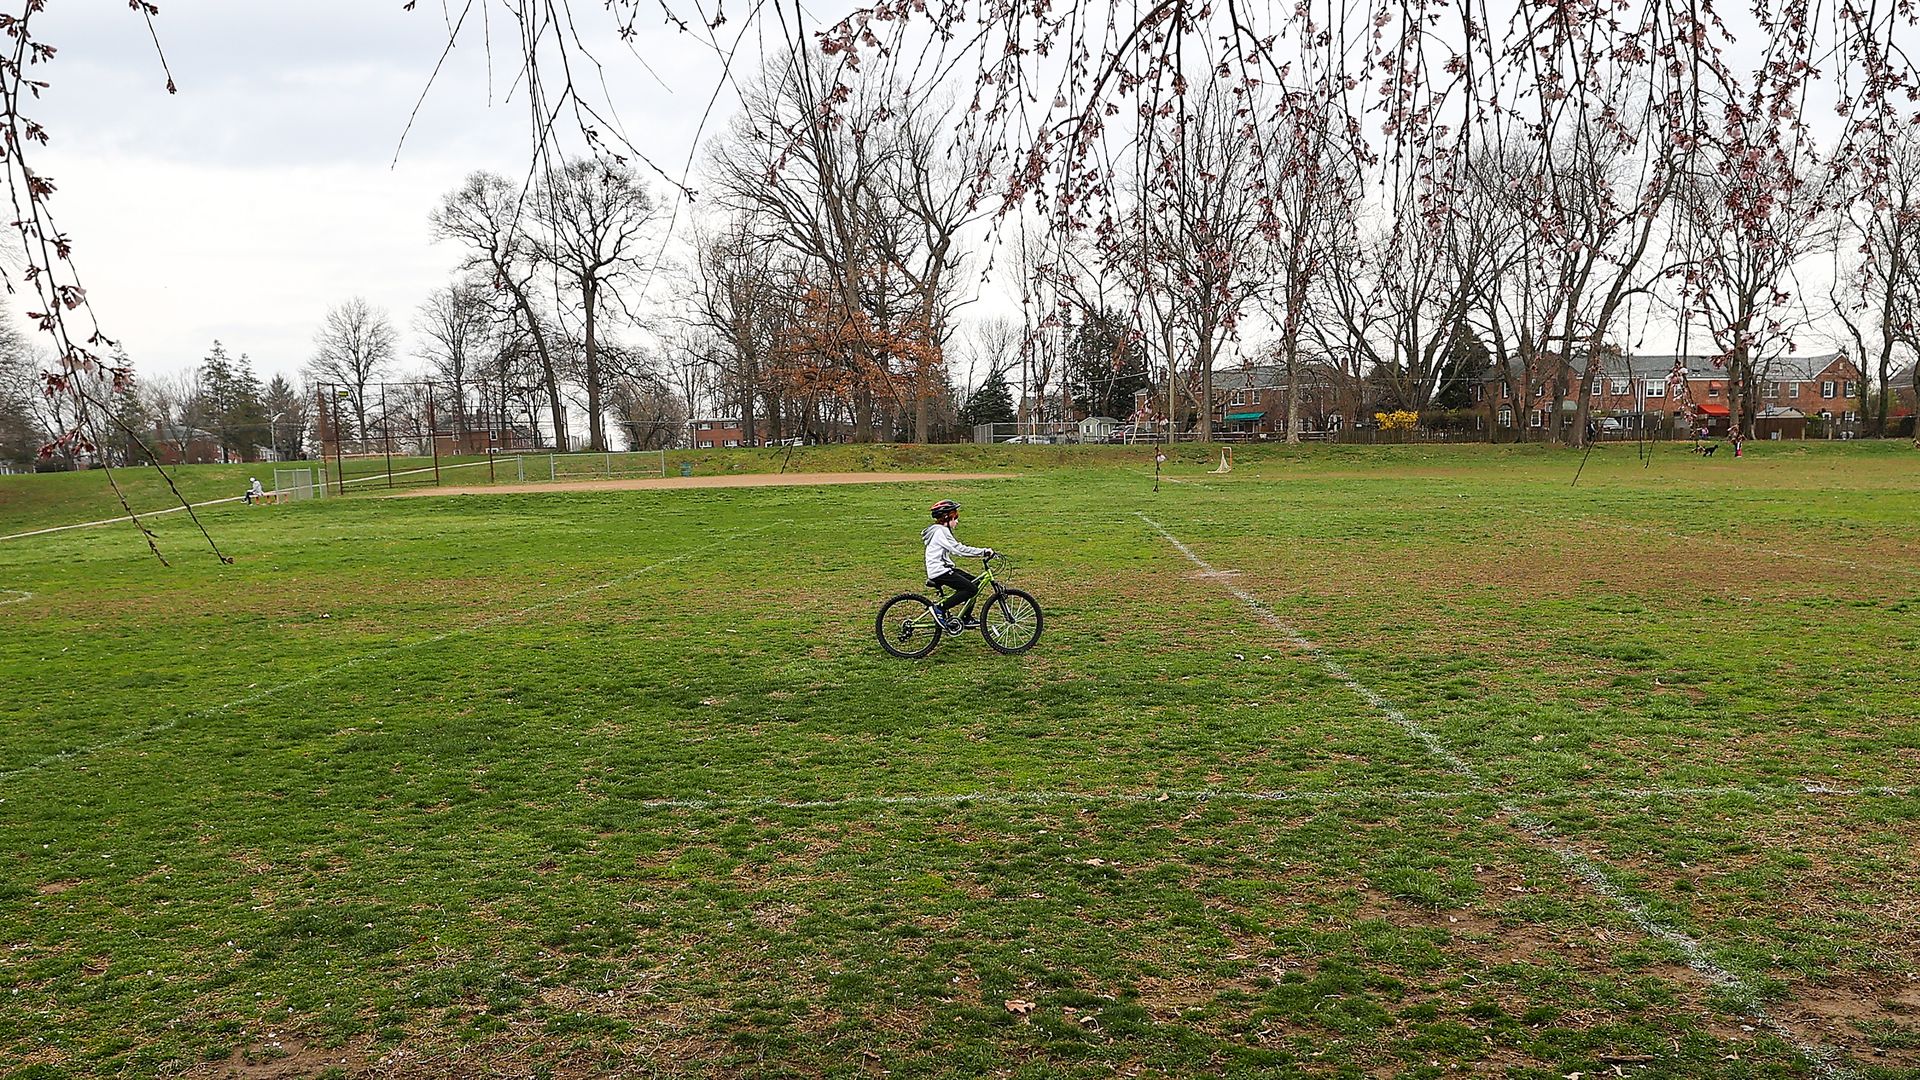 Child riding bike in field